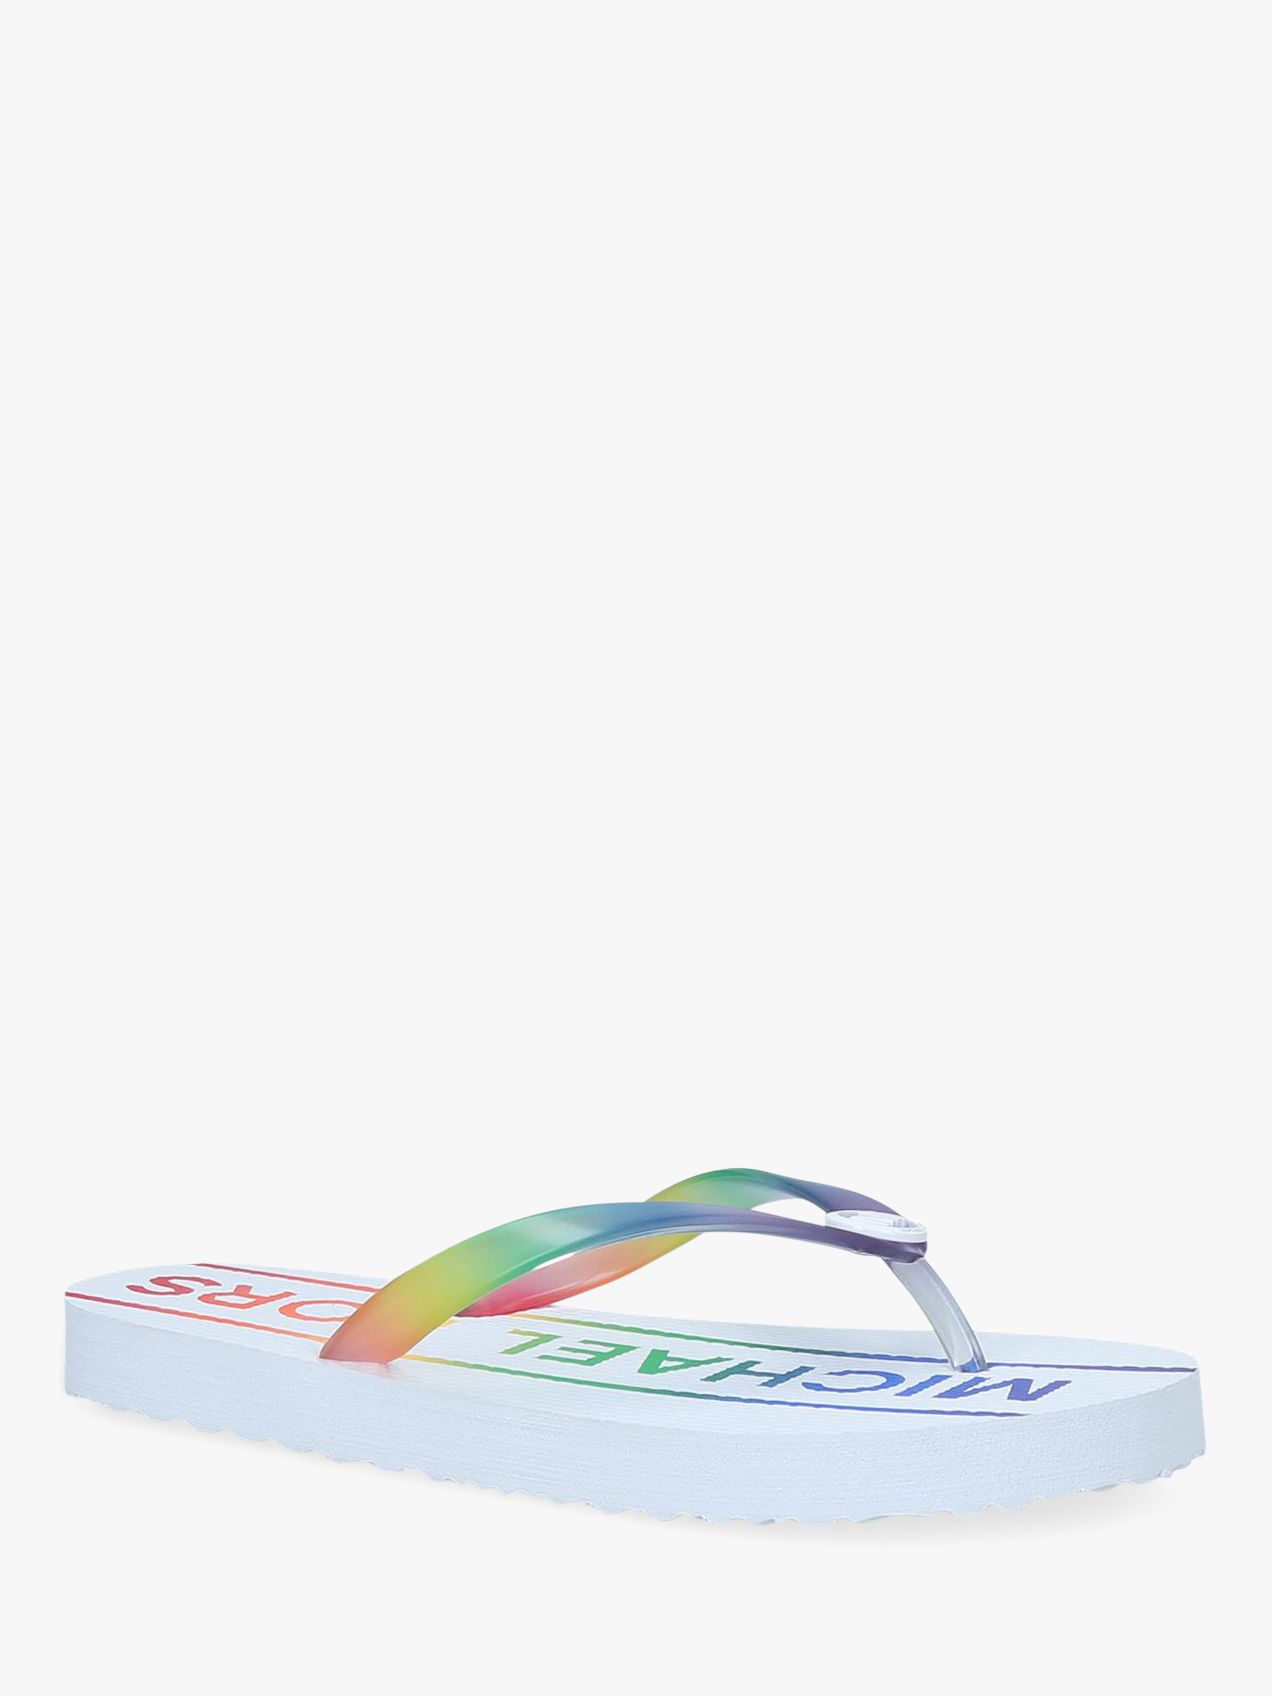 michael kors rainbow shoes